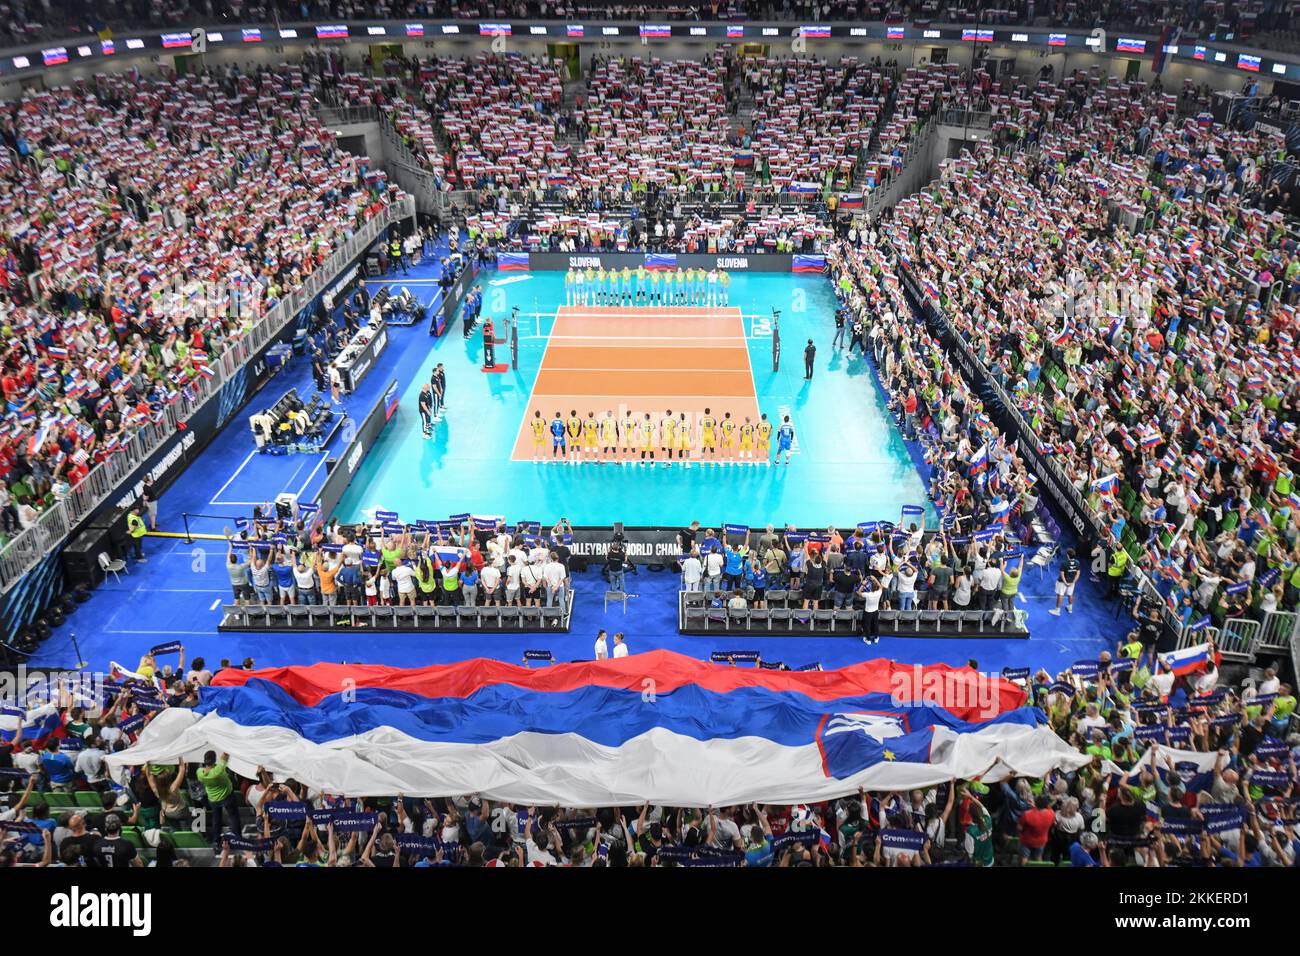 Copa mundial de voleibol fivb fotografías e imágenes de alta resolución -  Alamy